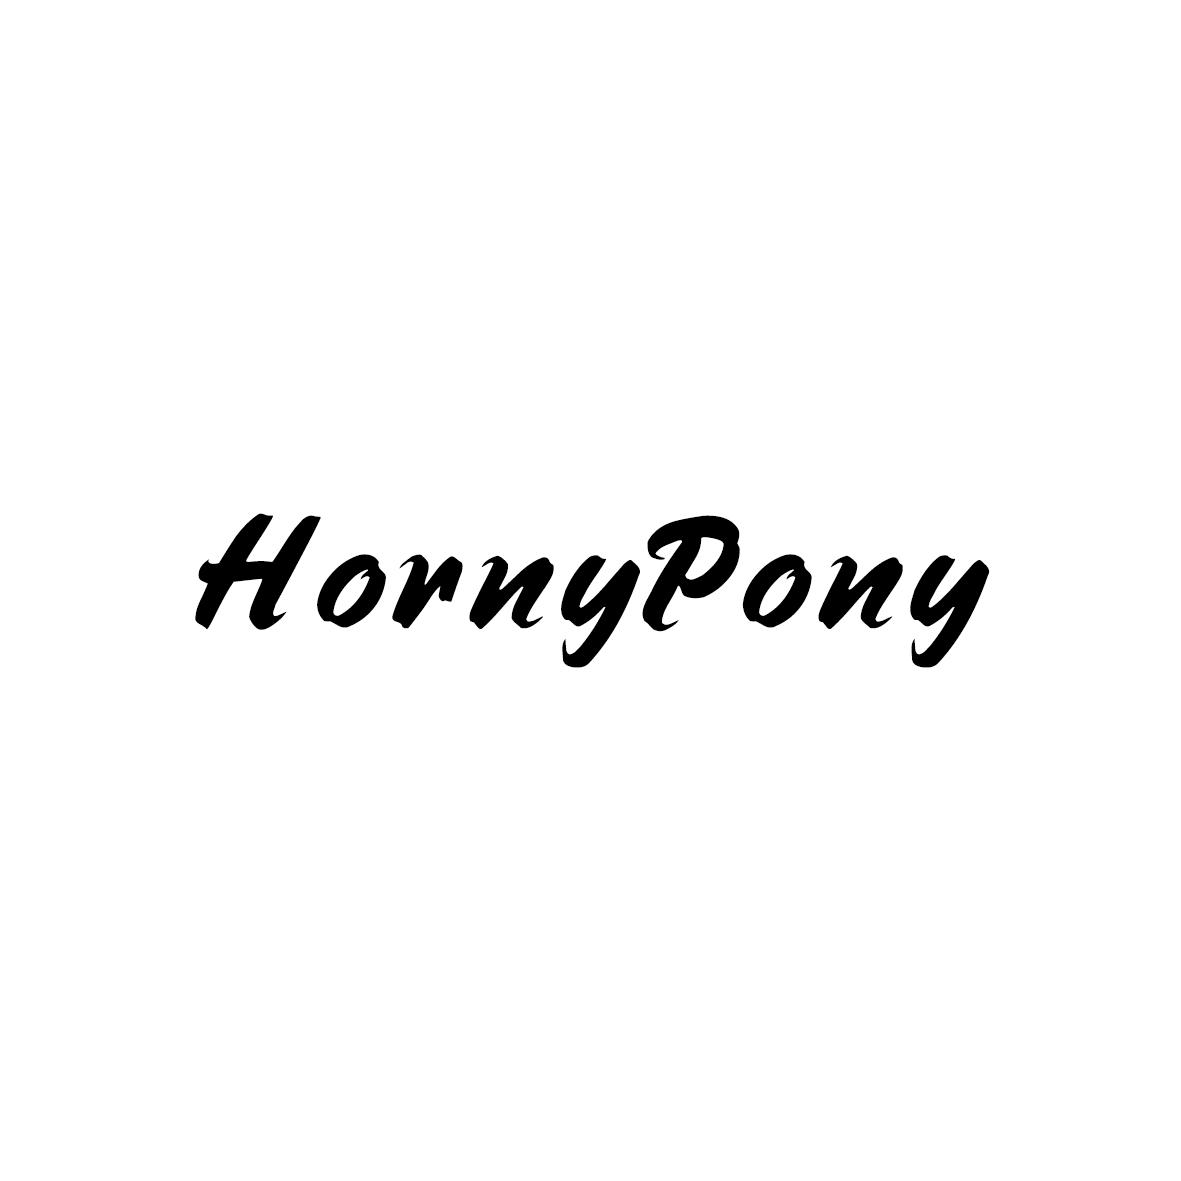 HornyPony